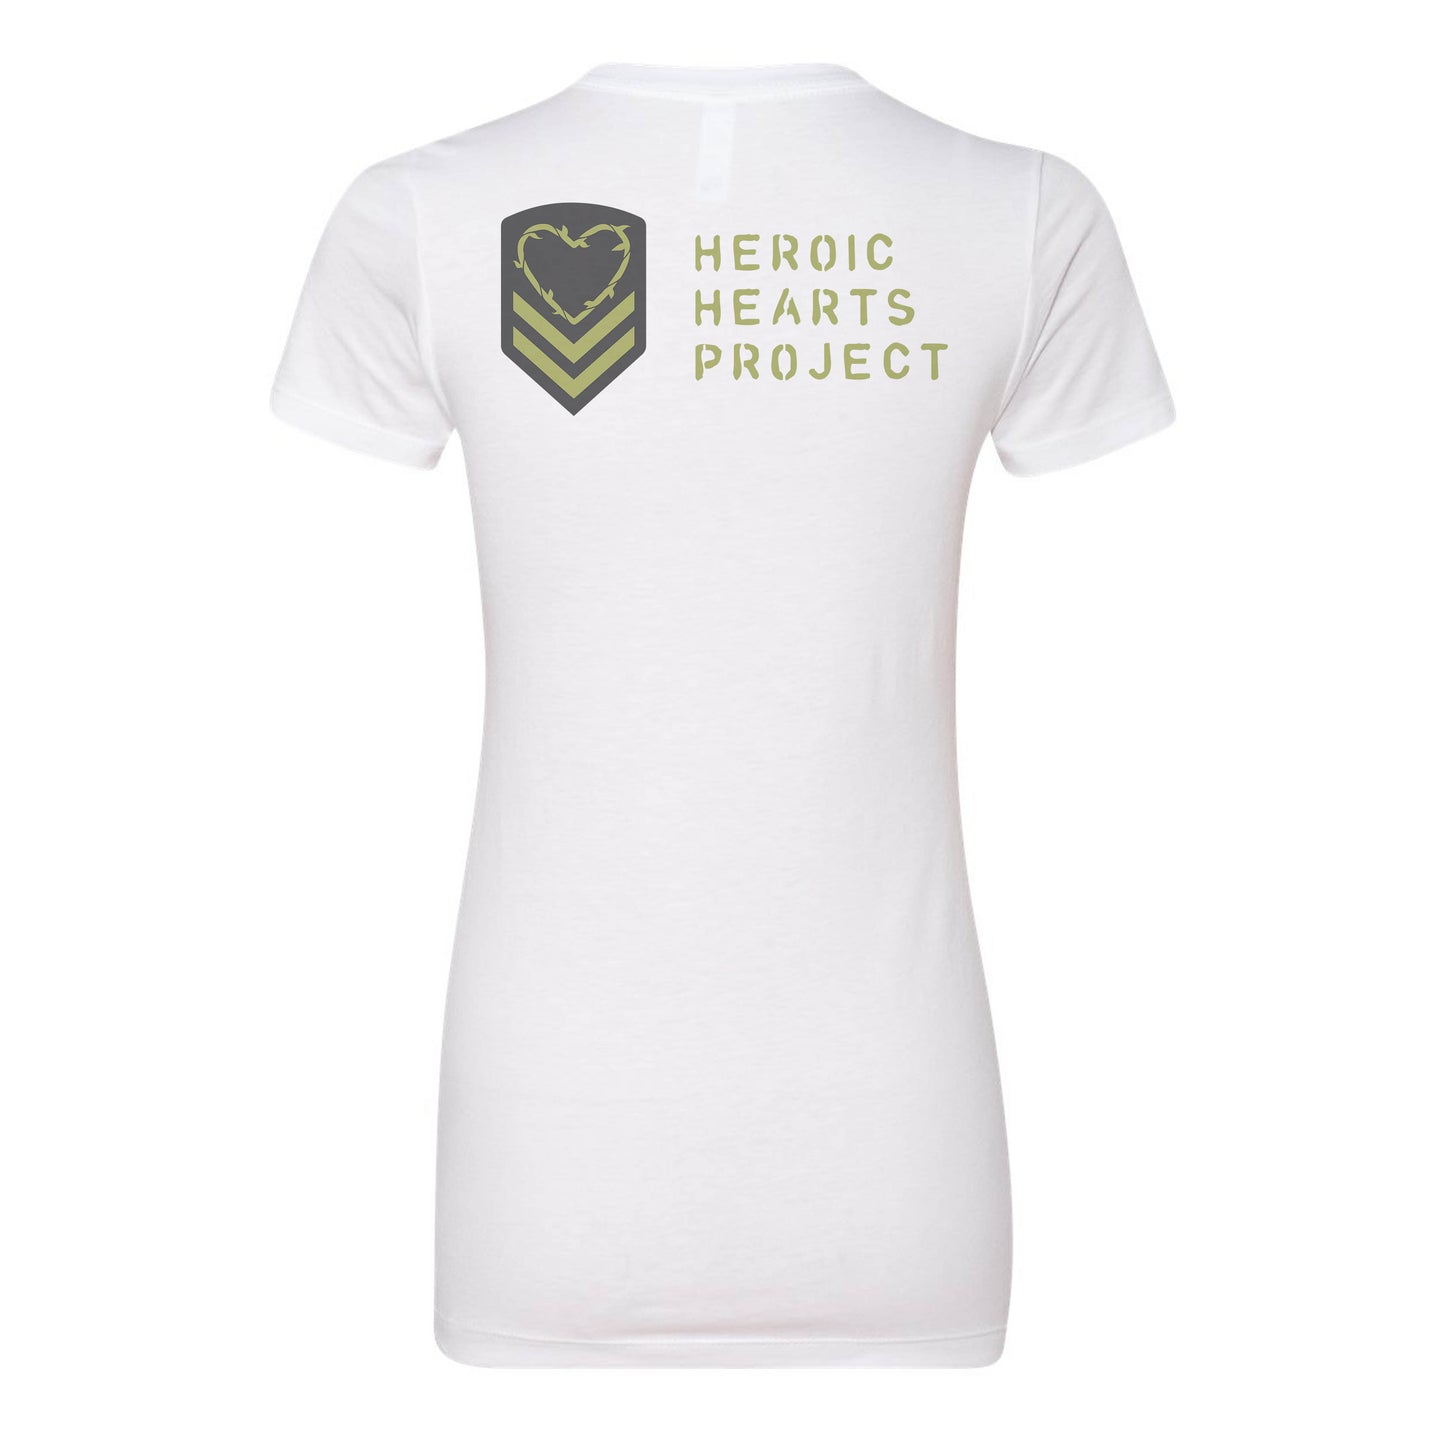 Heroic Hearts Project Logo Ladies Shirt